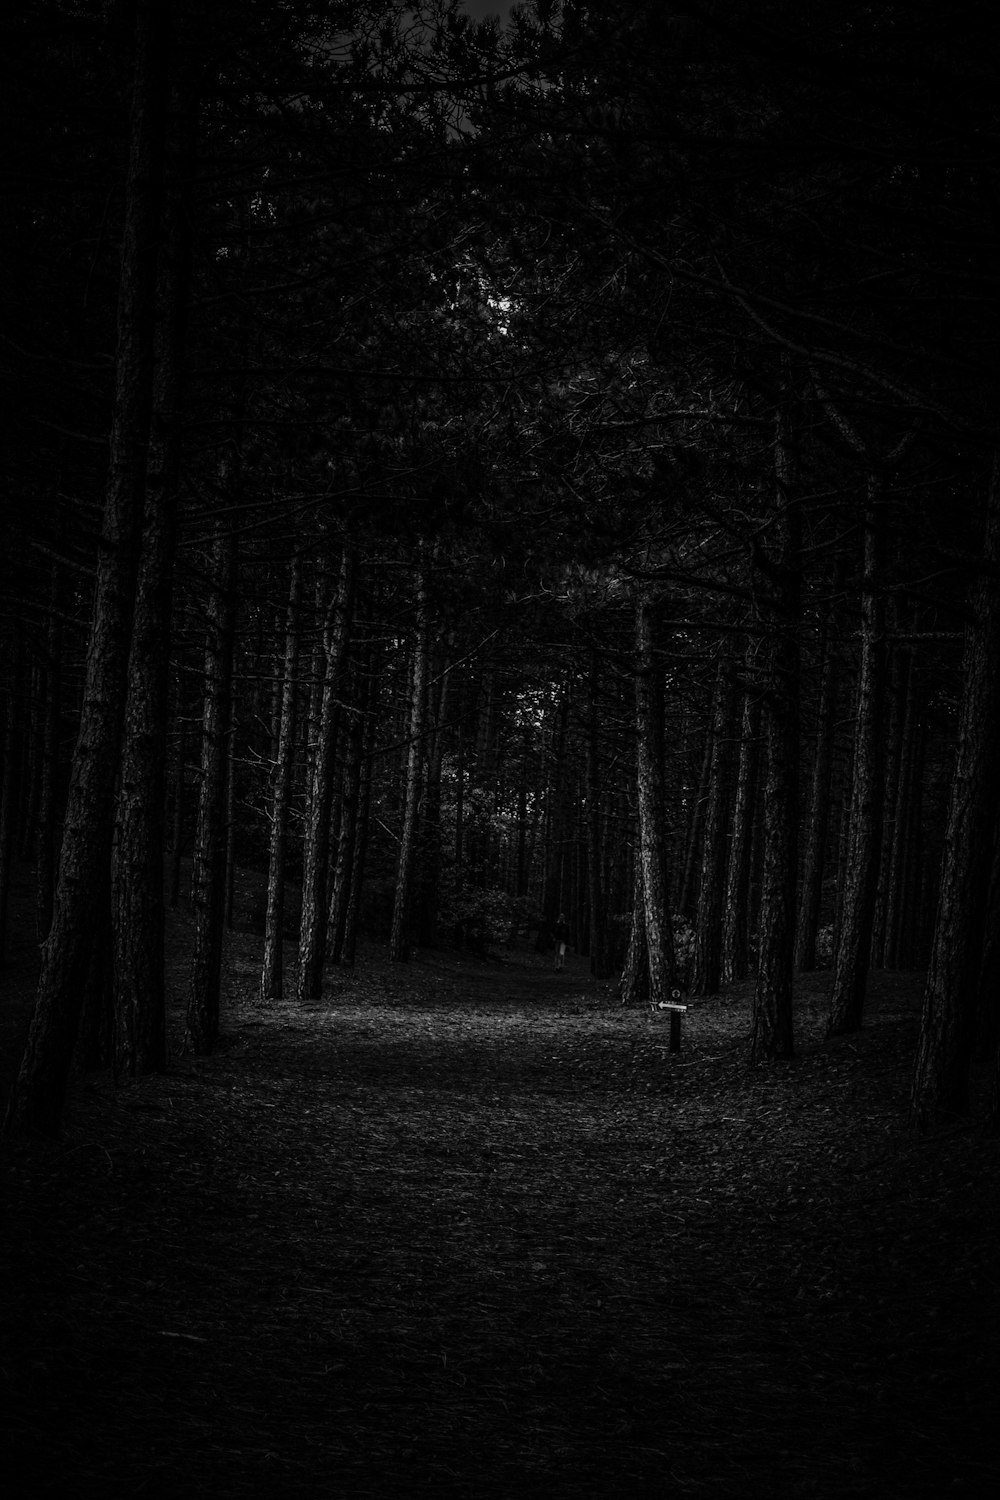 Una foto in bianco e nero di una foresta oscura